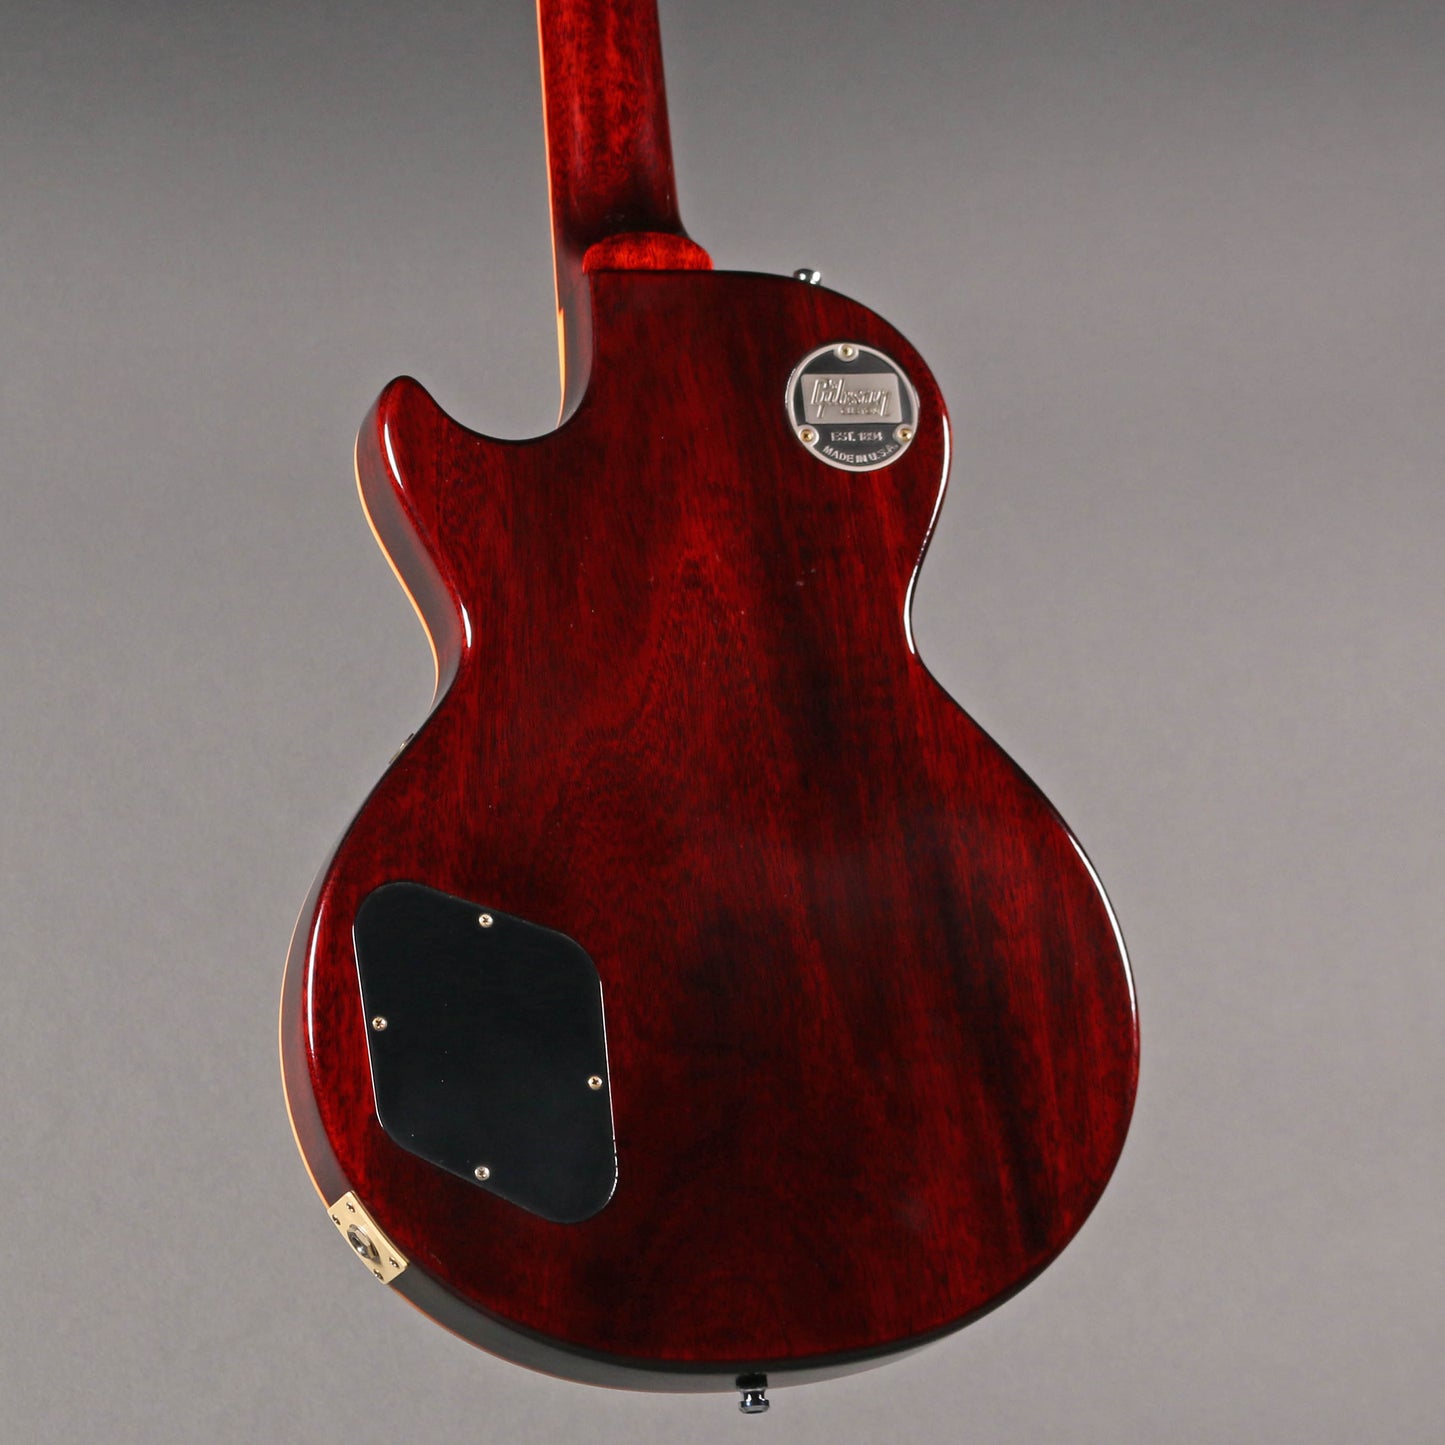 2022 Gibson Custom Shop '58 Reissue Les Paul Standard R8